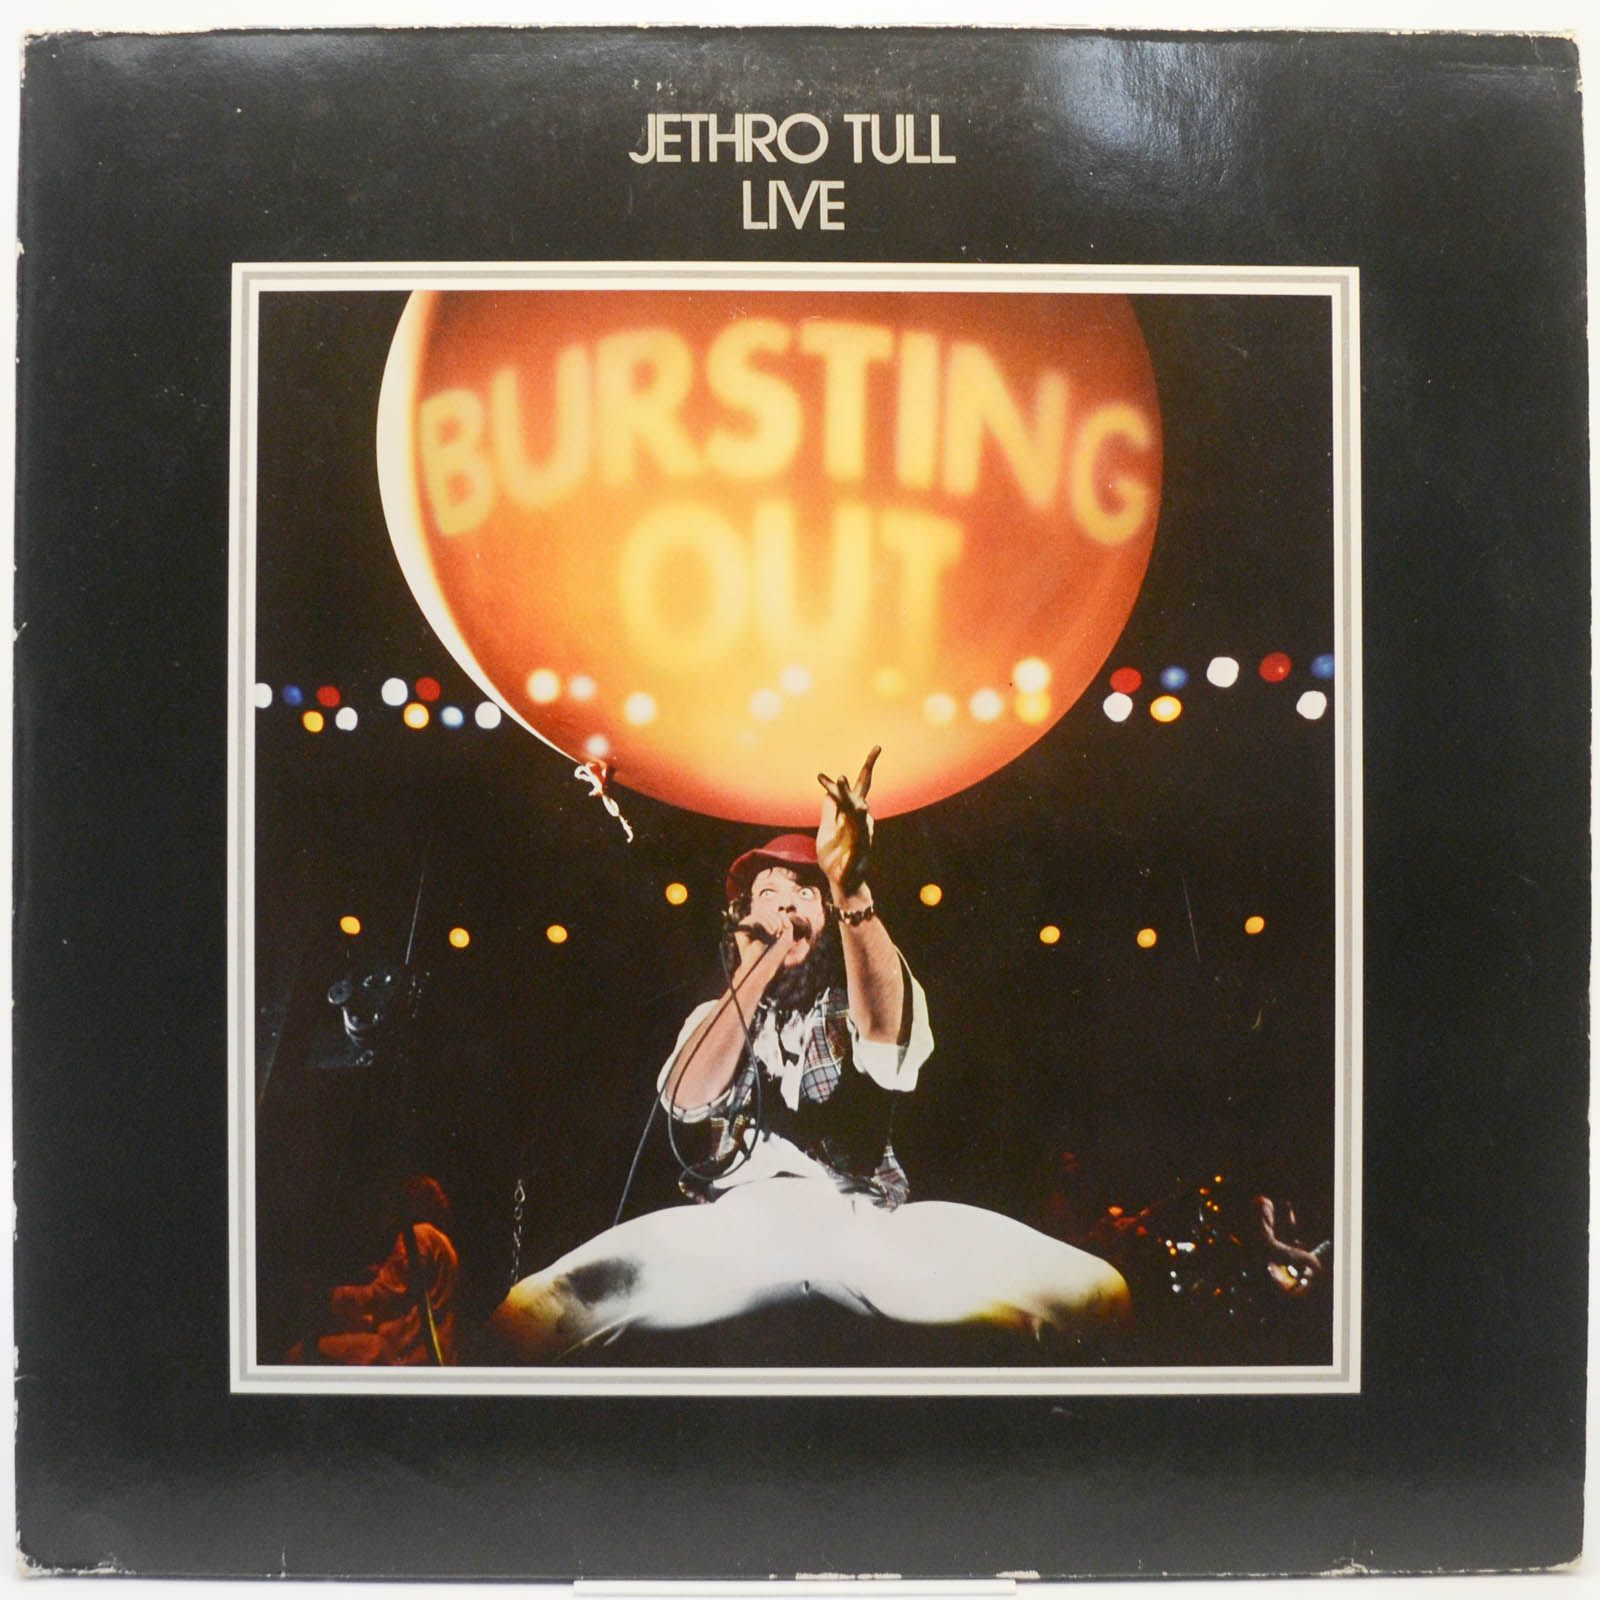 Jethro Tull — Live - Bursting Out (2LP), 1978